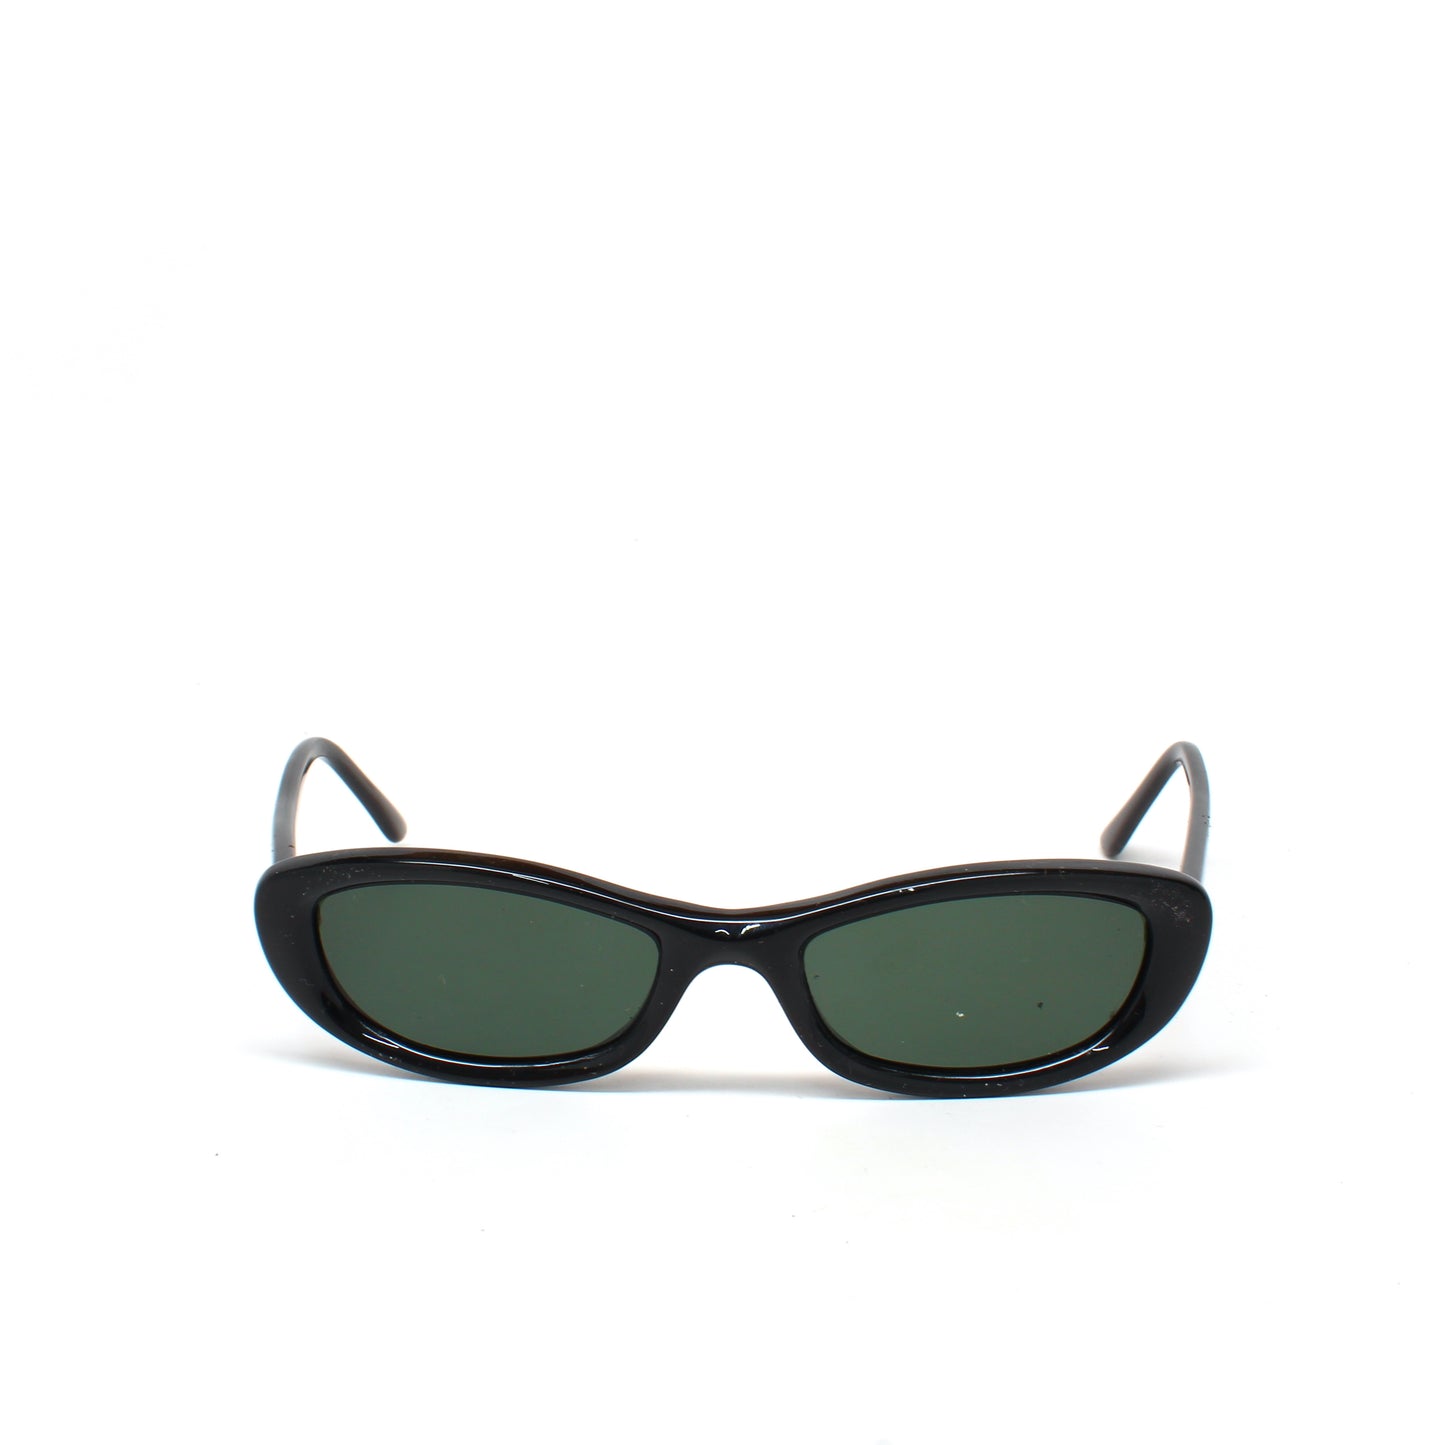 Vintage Small Sized 90s Mod Slim Narrow Rectangle Shape Sunglasses - Black